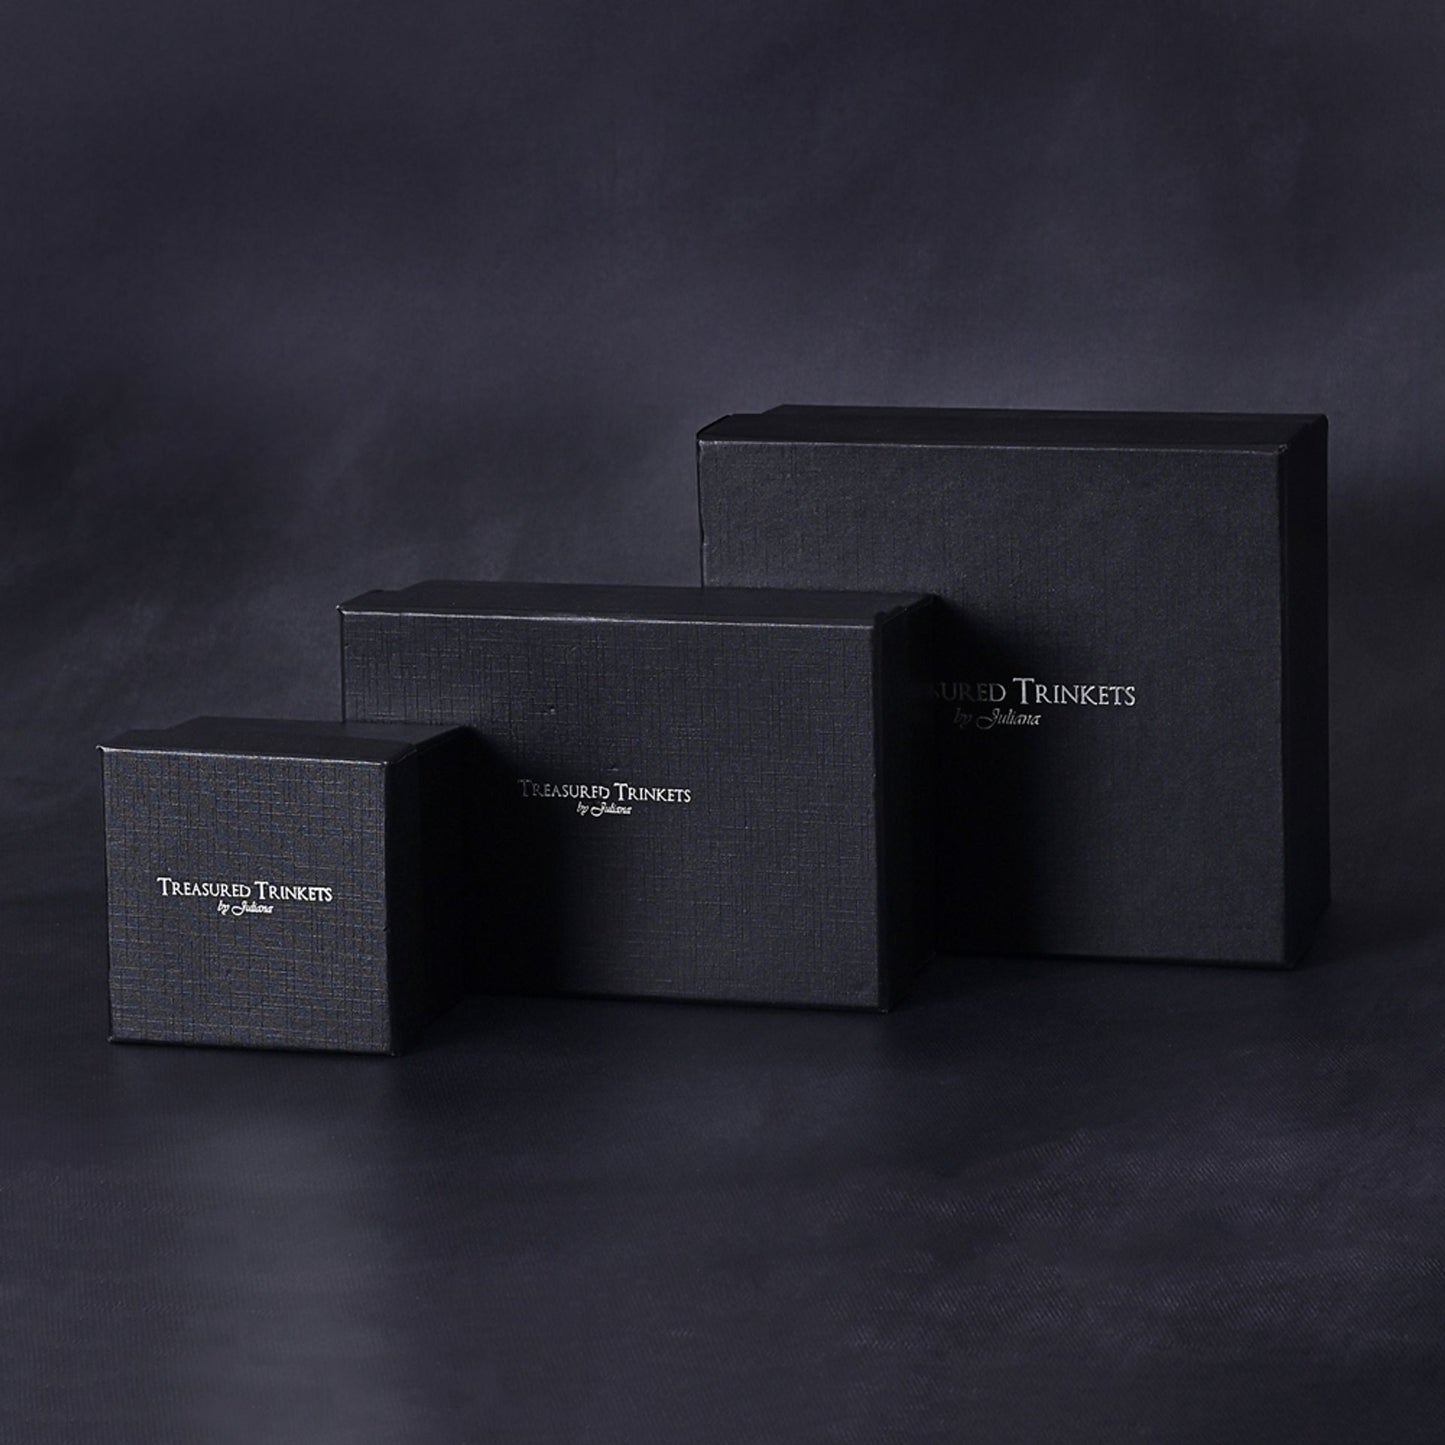 Carriage Trinket Box - 7.5 x 5 x 10 cm - Gift Box - Crystal